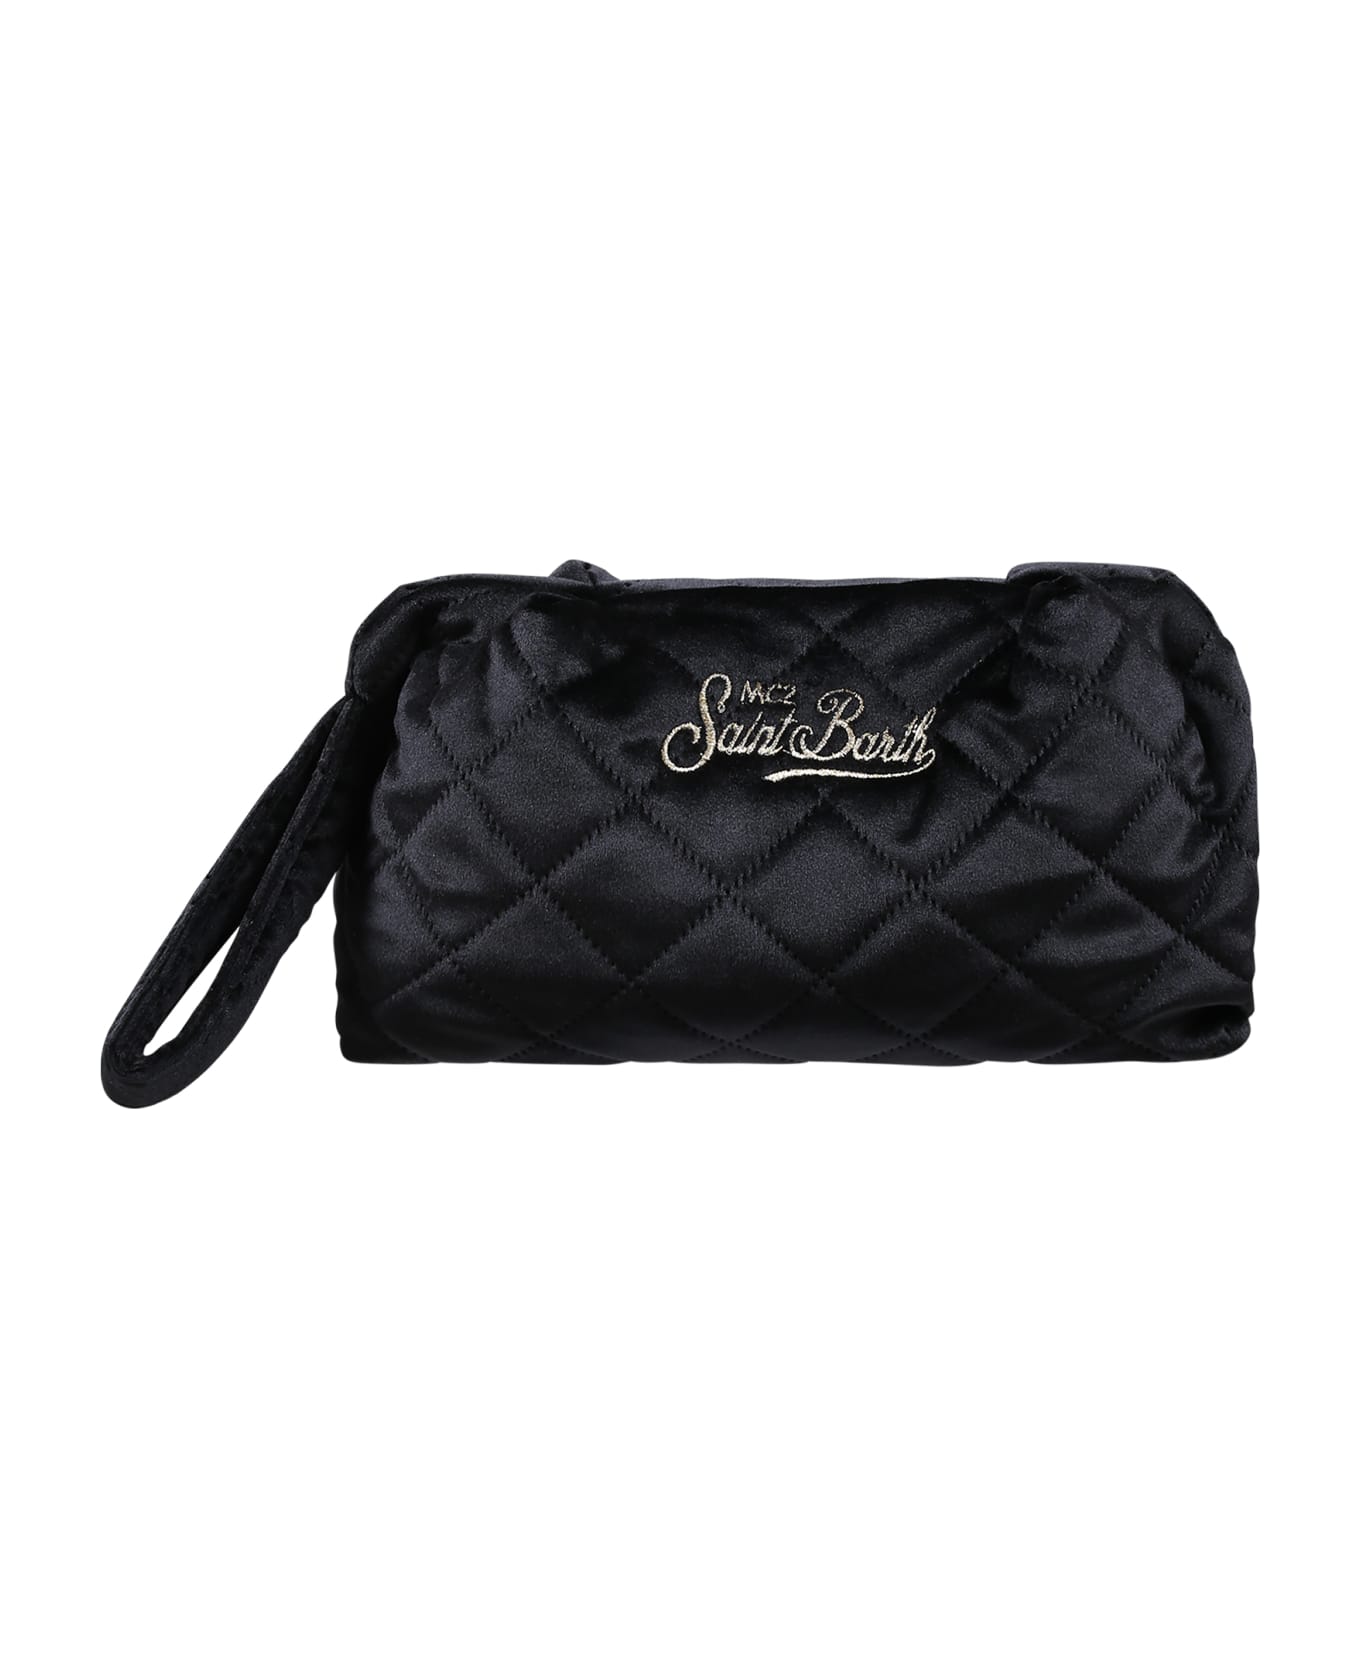 MC2 Saint Barth Black Bag For Girl With Logo - Black